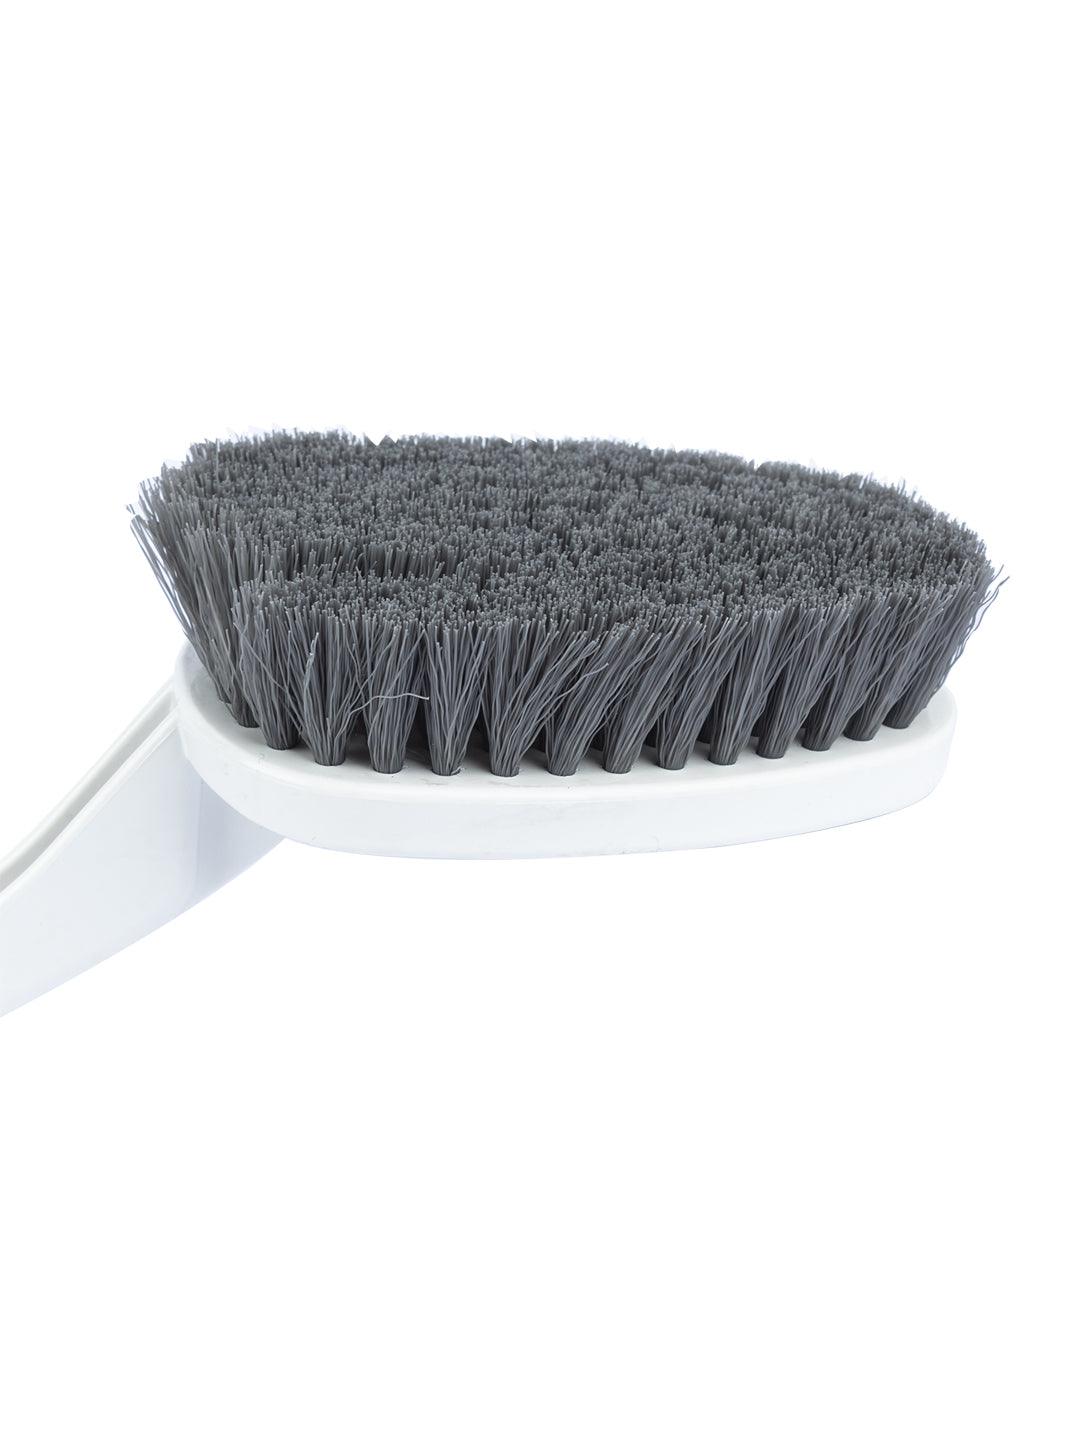 Market 99 Cleaning Brush, Colorblock, Grey, Plastic - MARKET 99